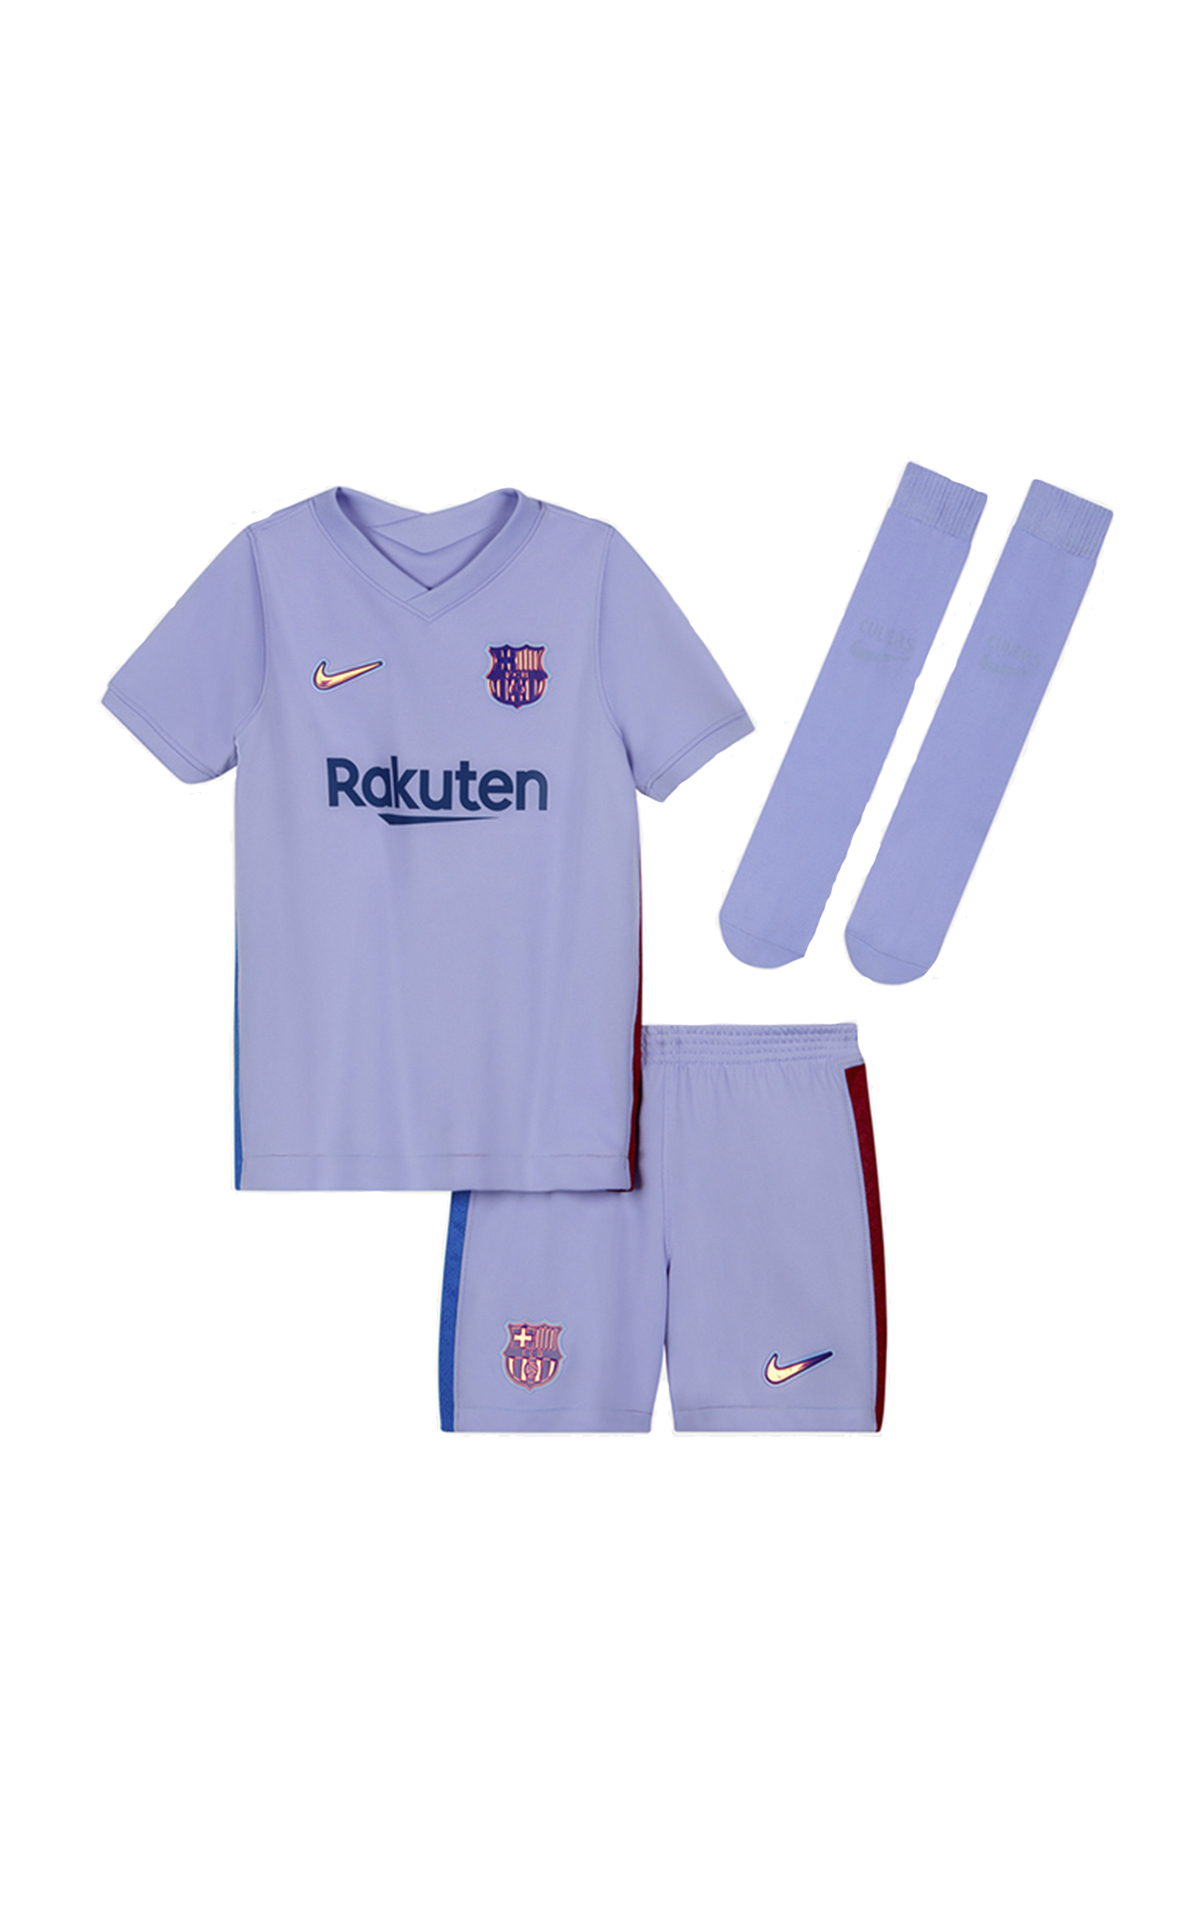 Barça Store junior kit